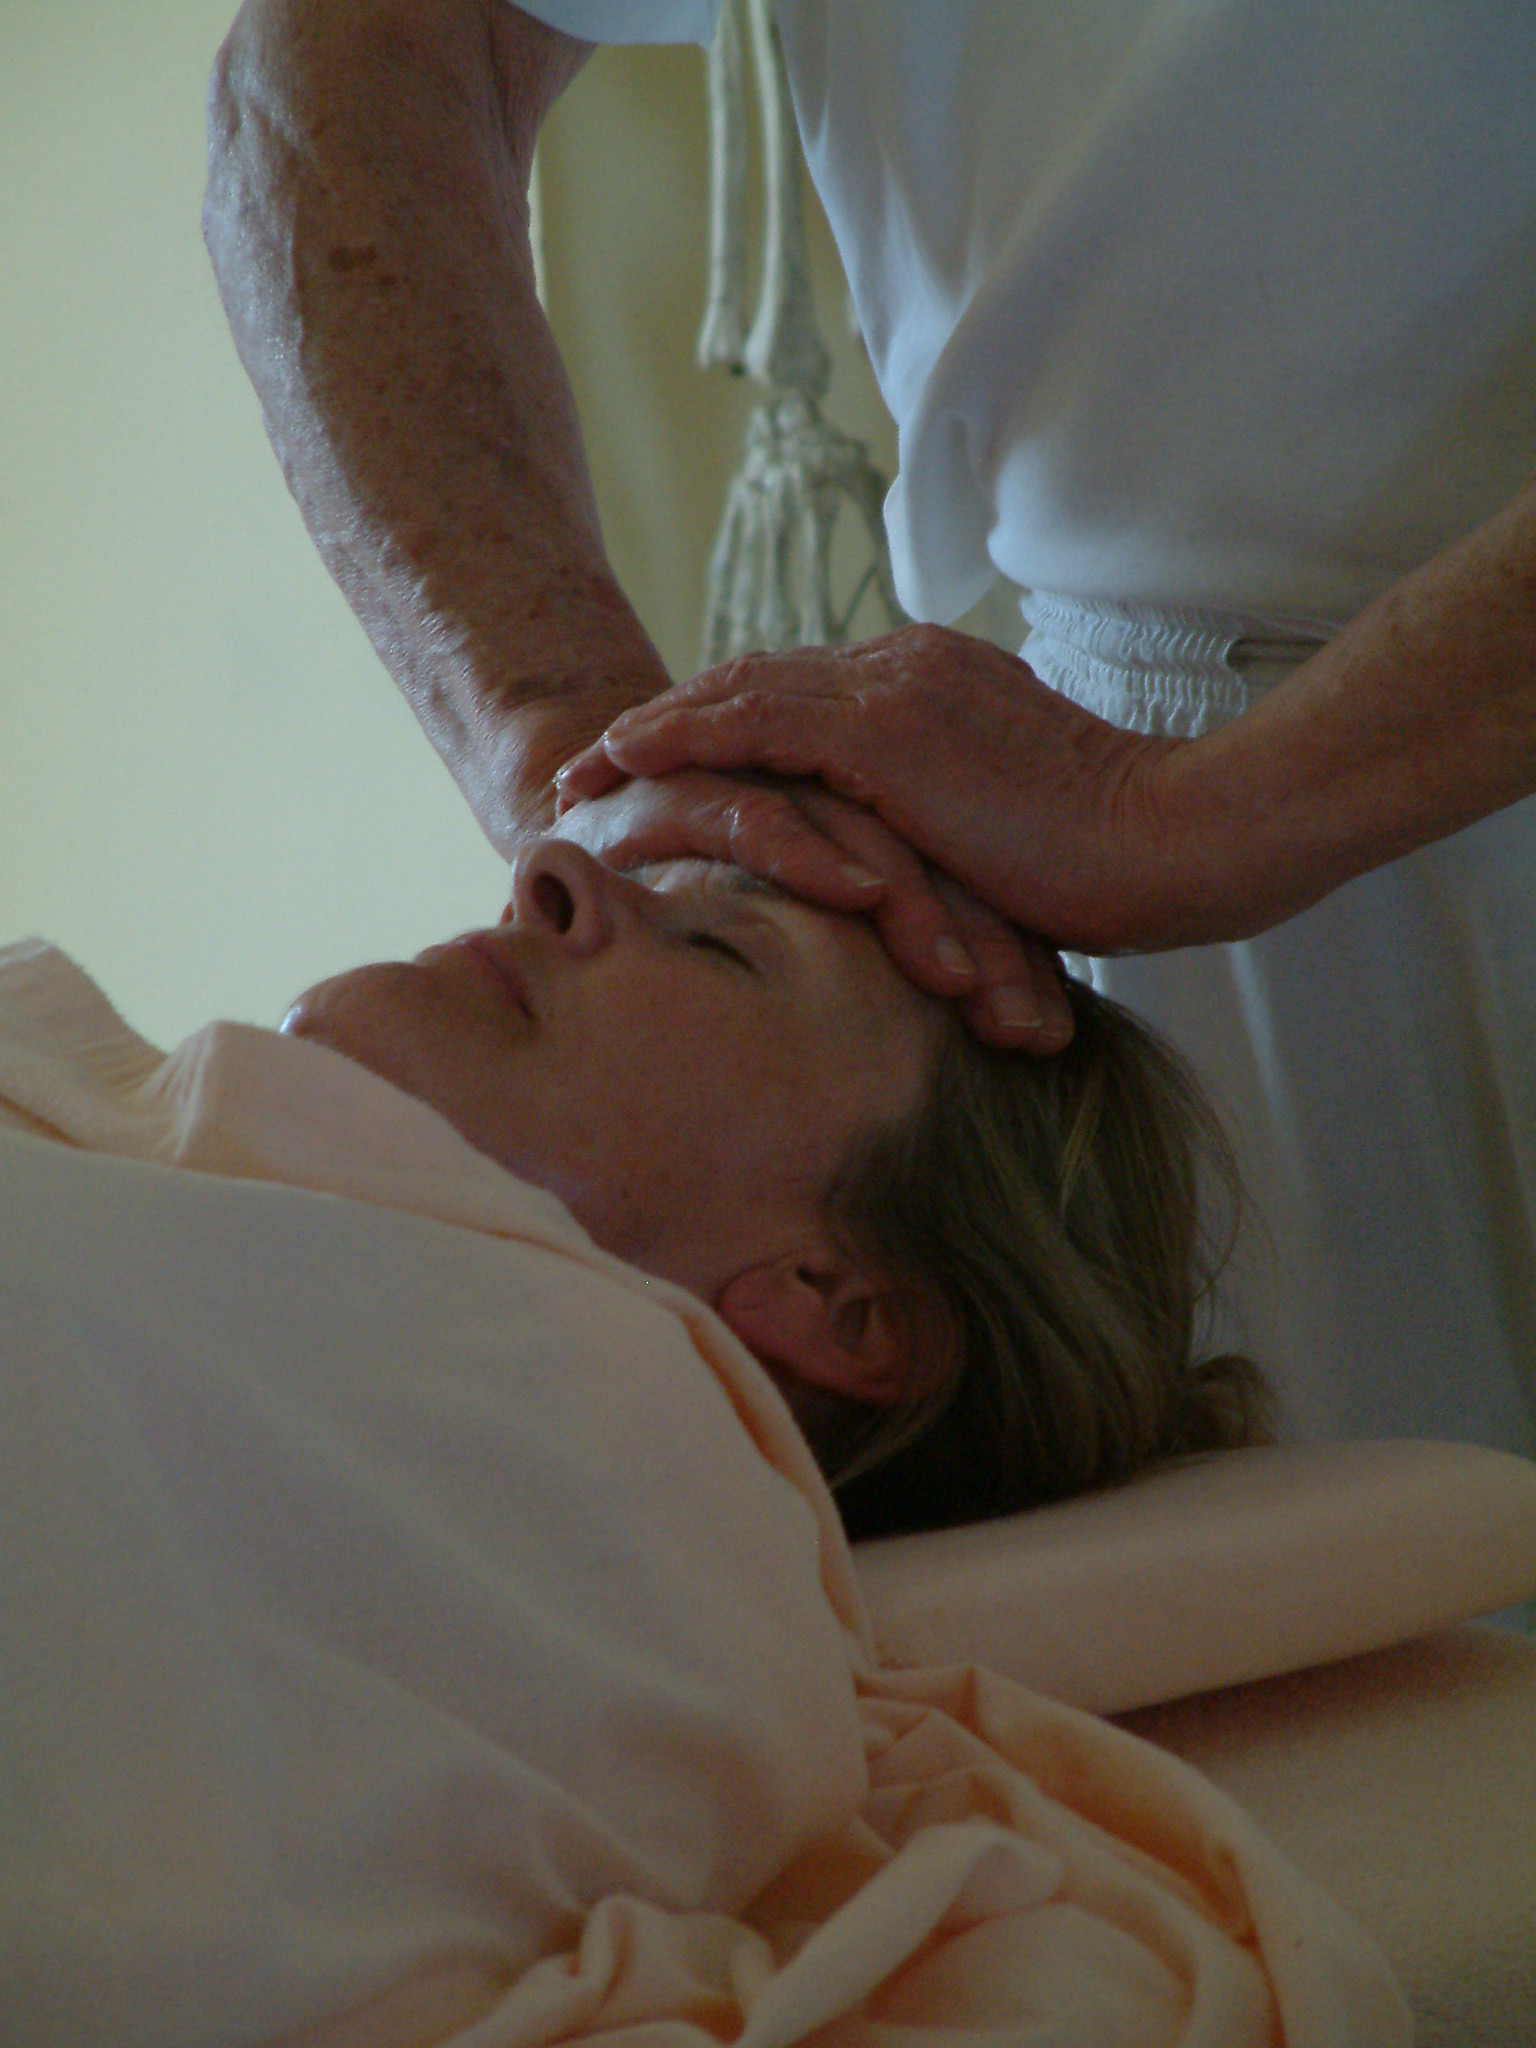 A head massage demonstration